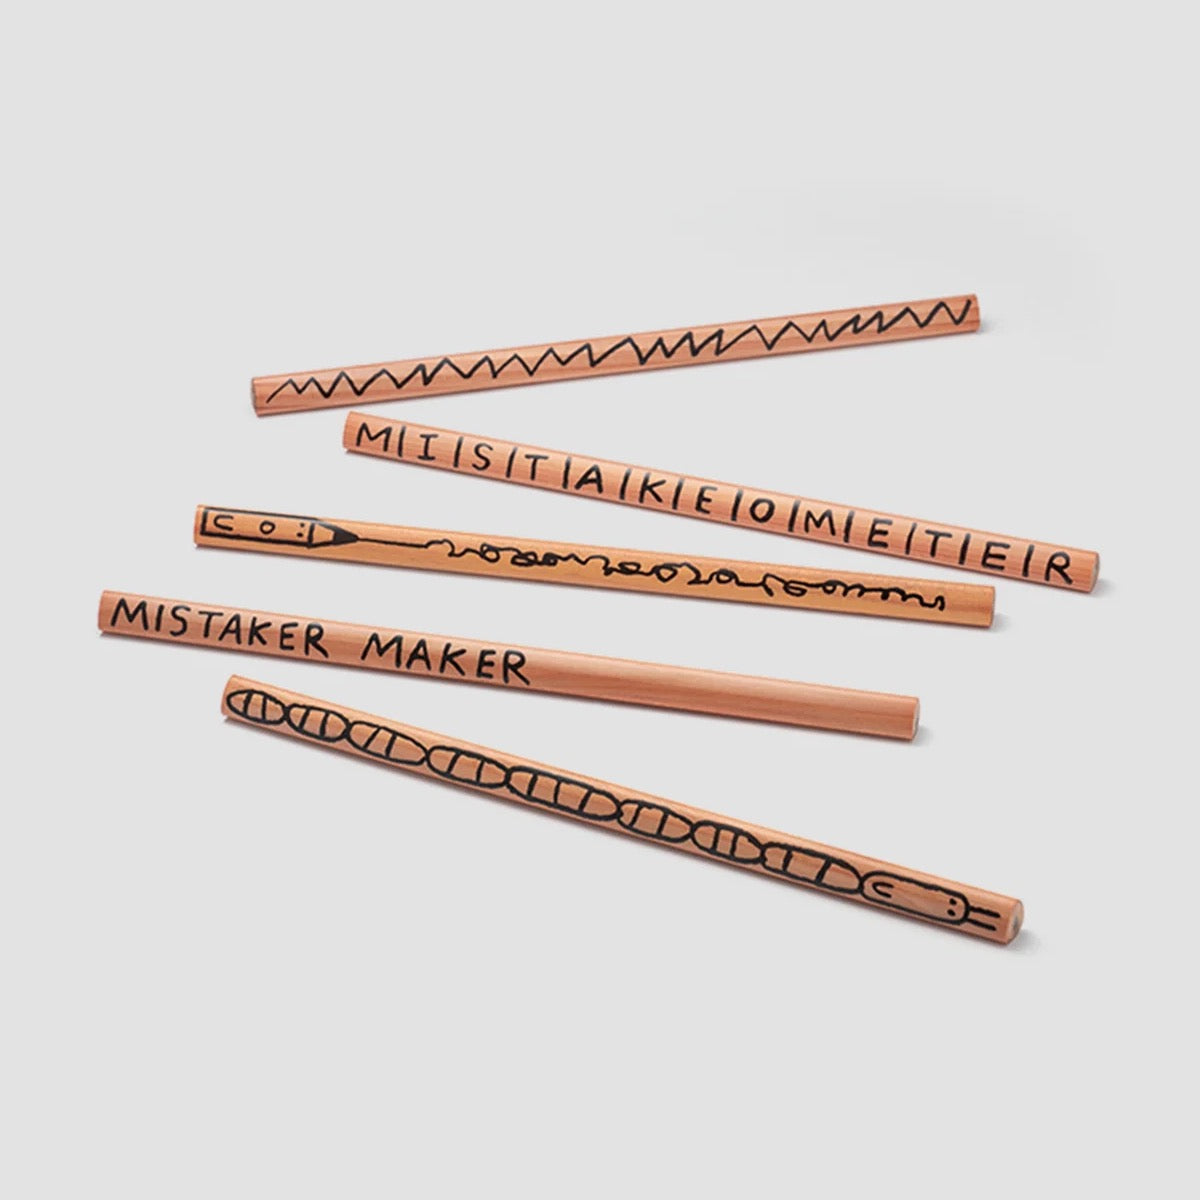 Woset Greeba's Mistaker Maker Pencil